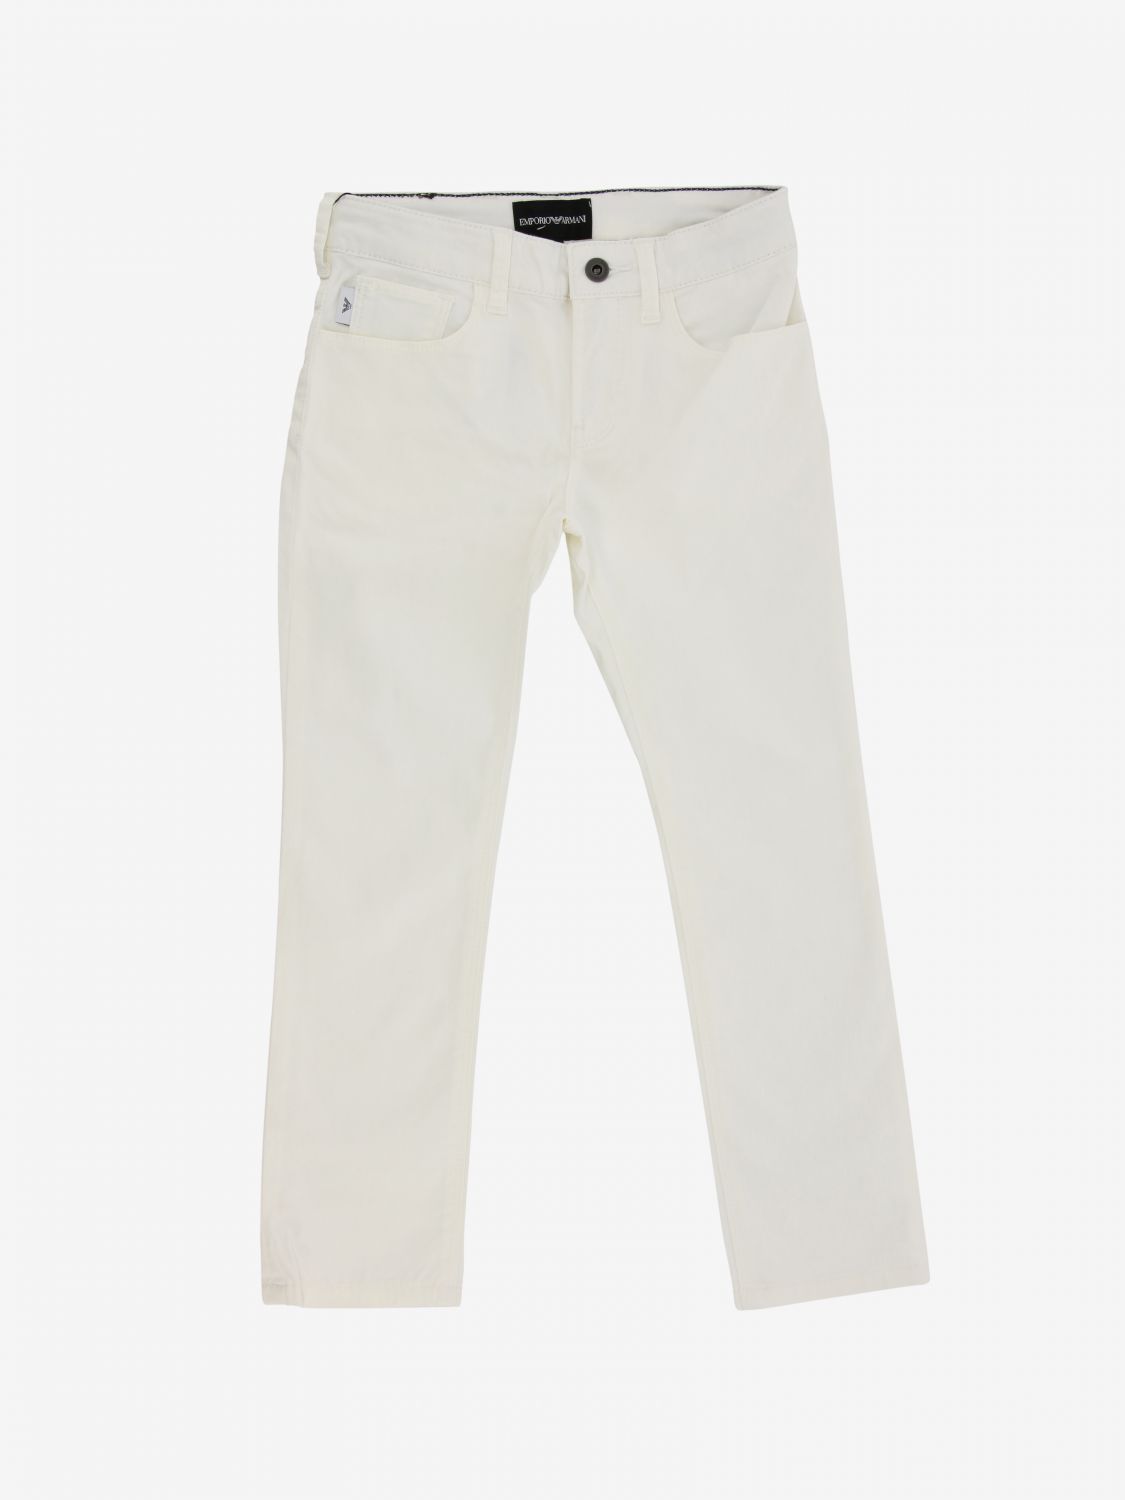 armani white trousers